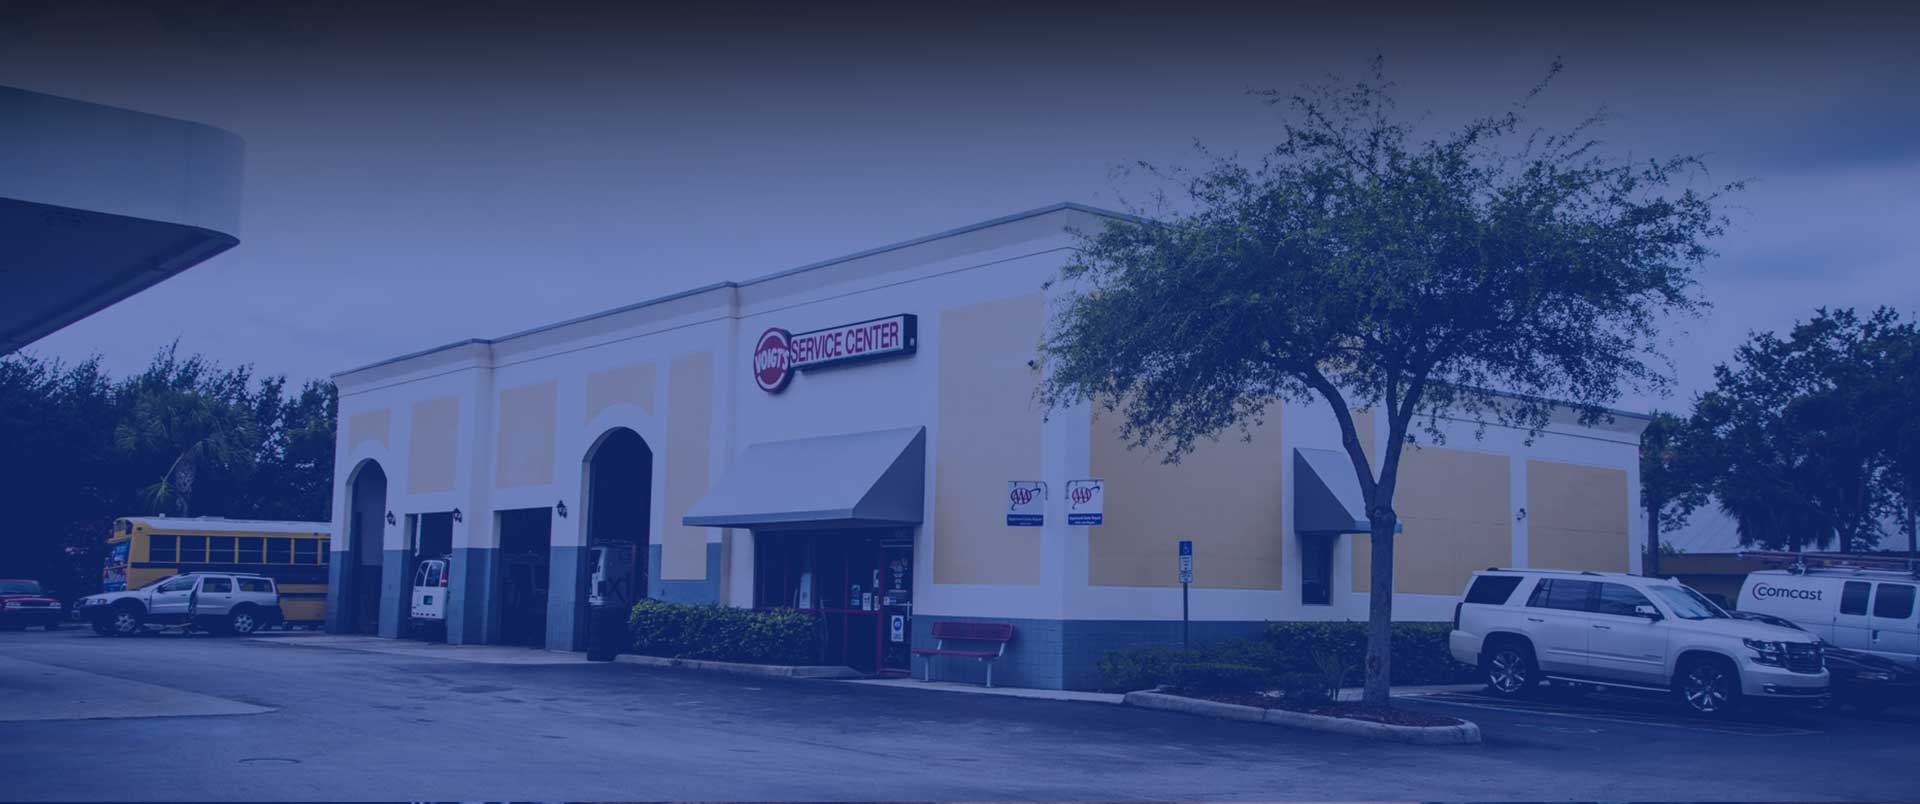 Voigts Auto Service Center - Naples, Florida